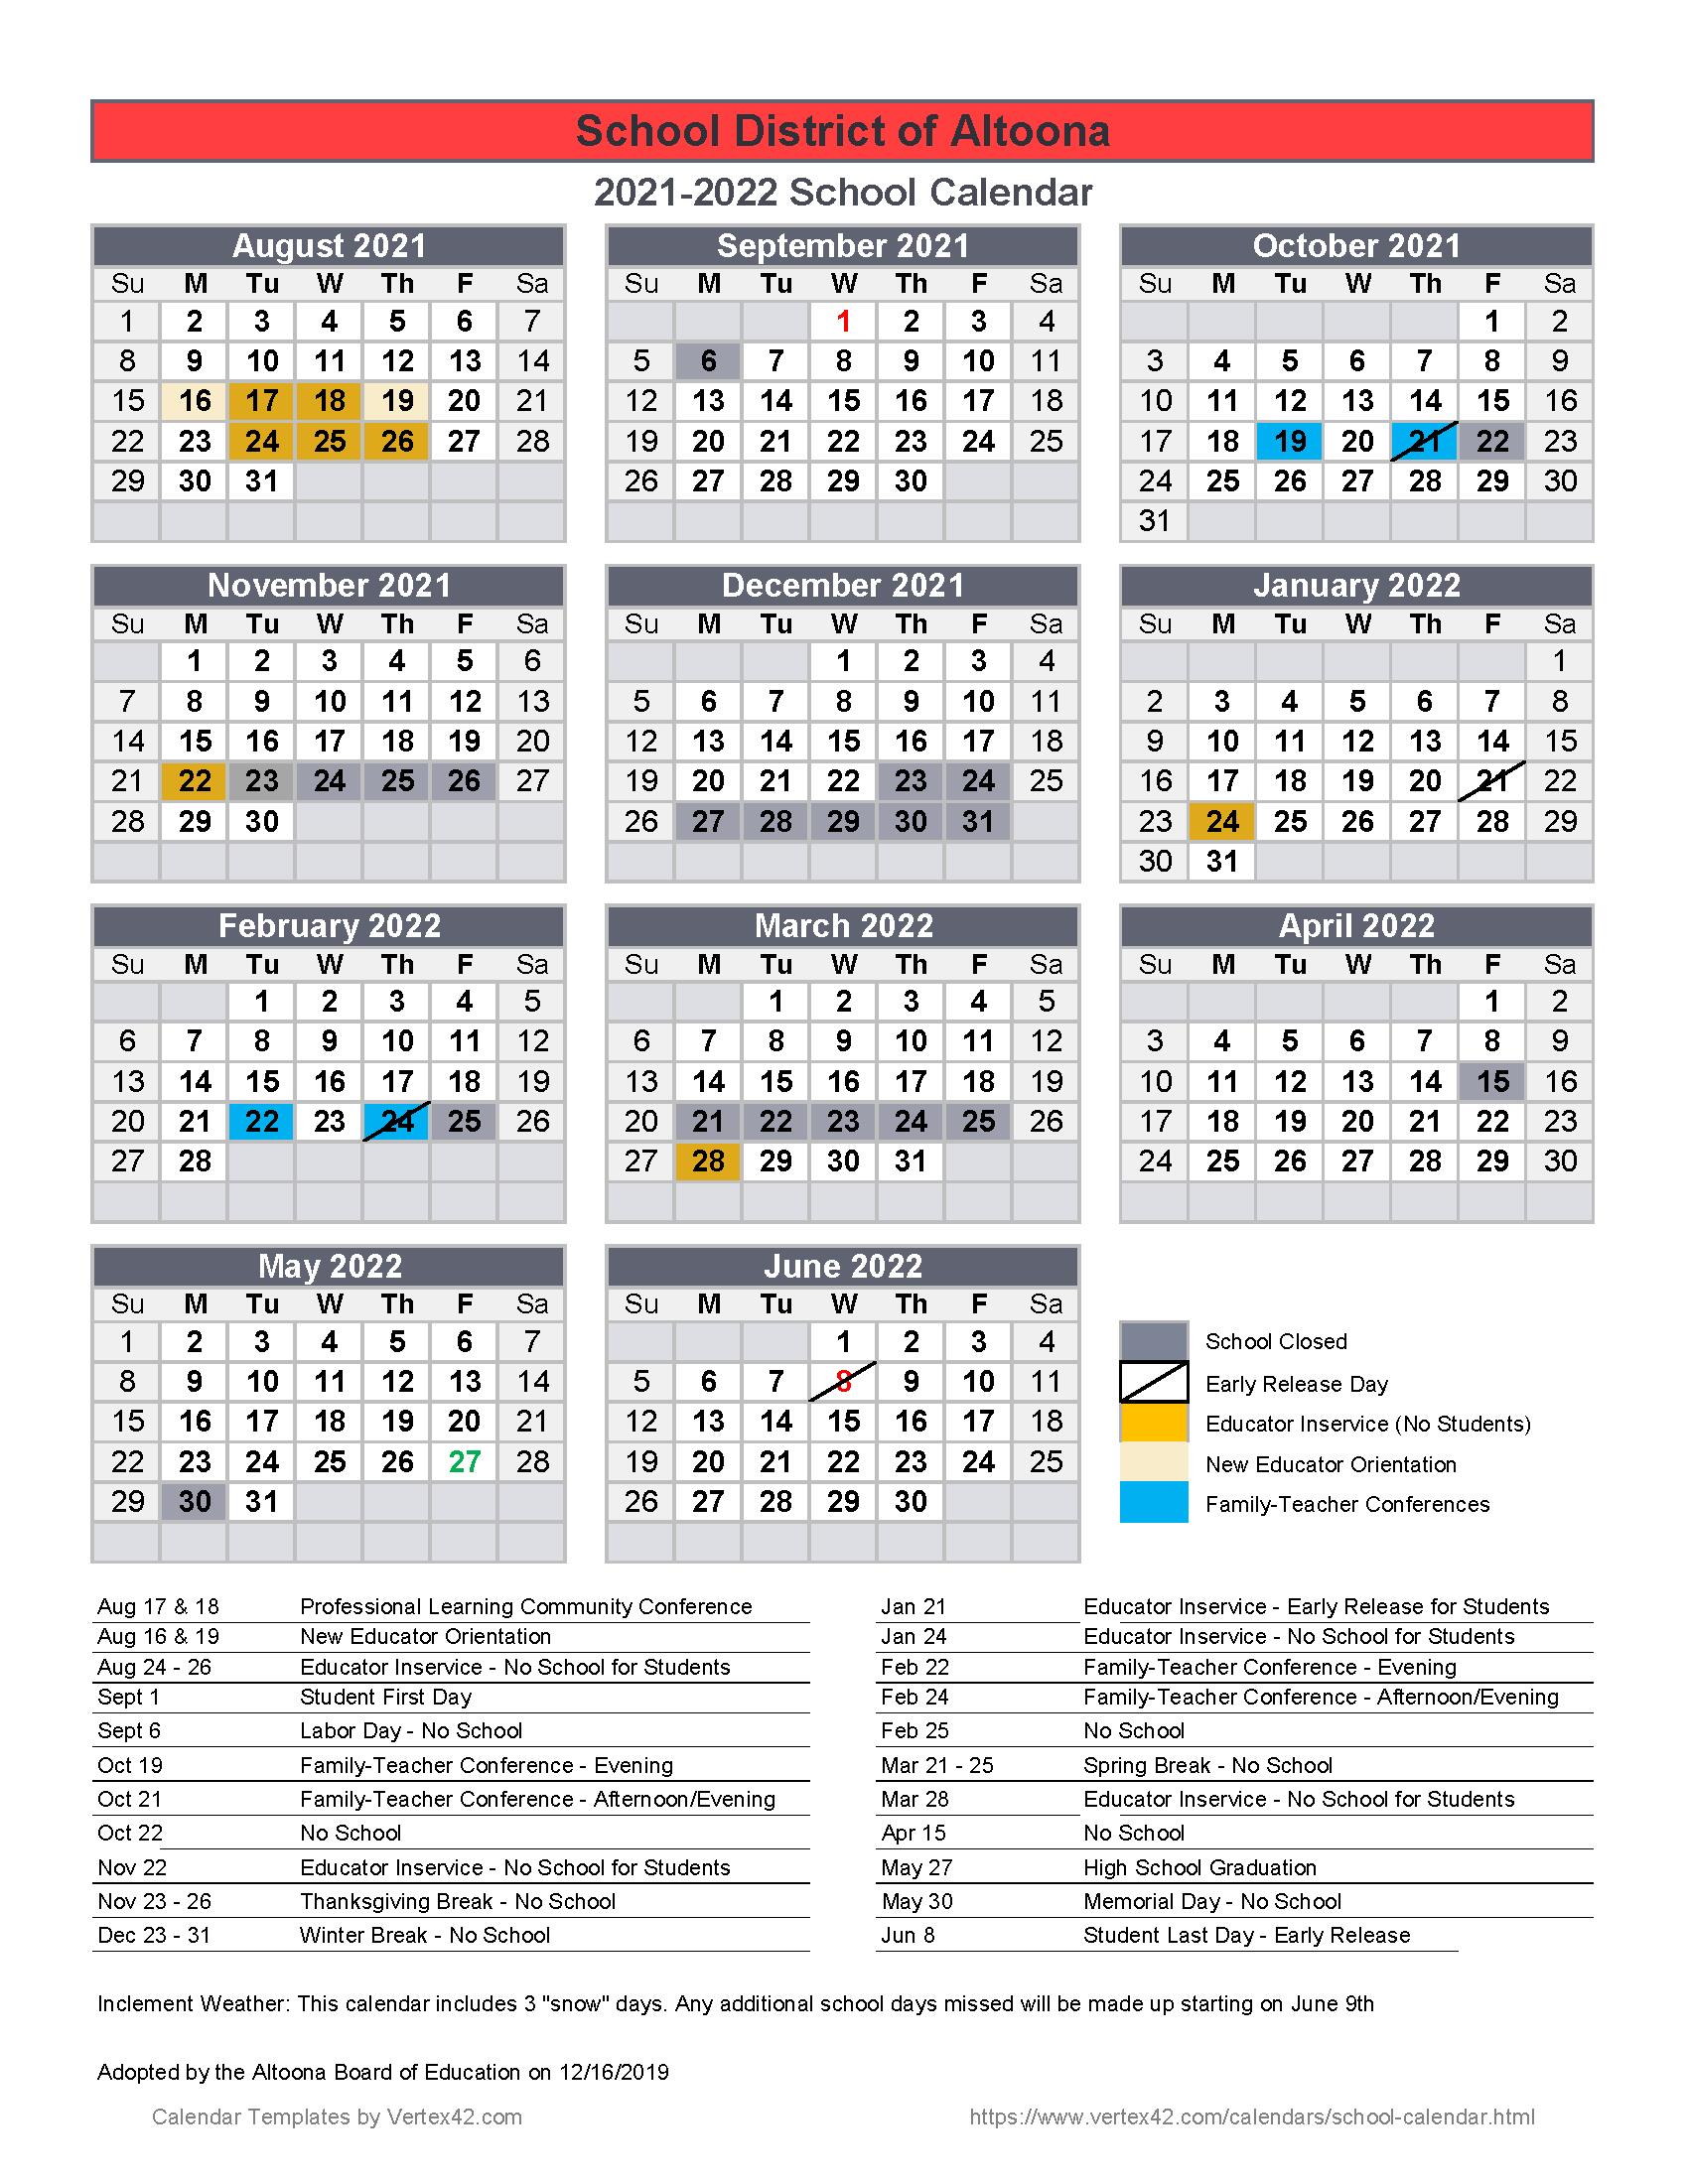 2021/22 Calendar